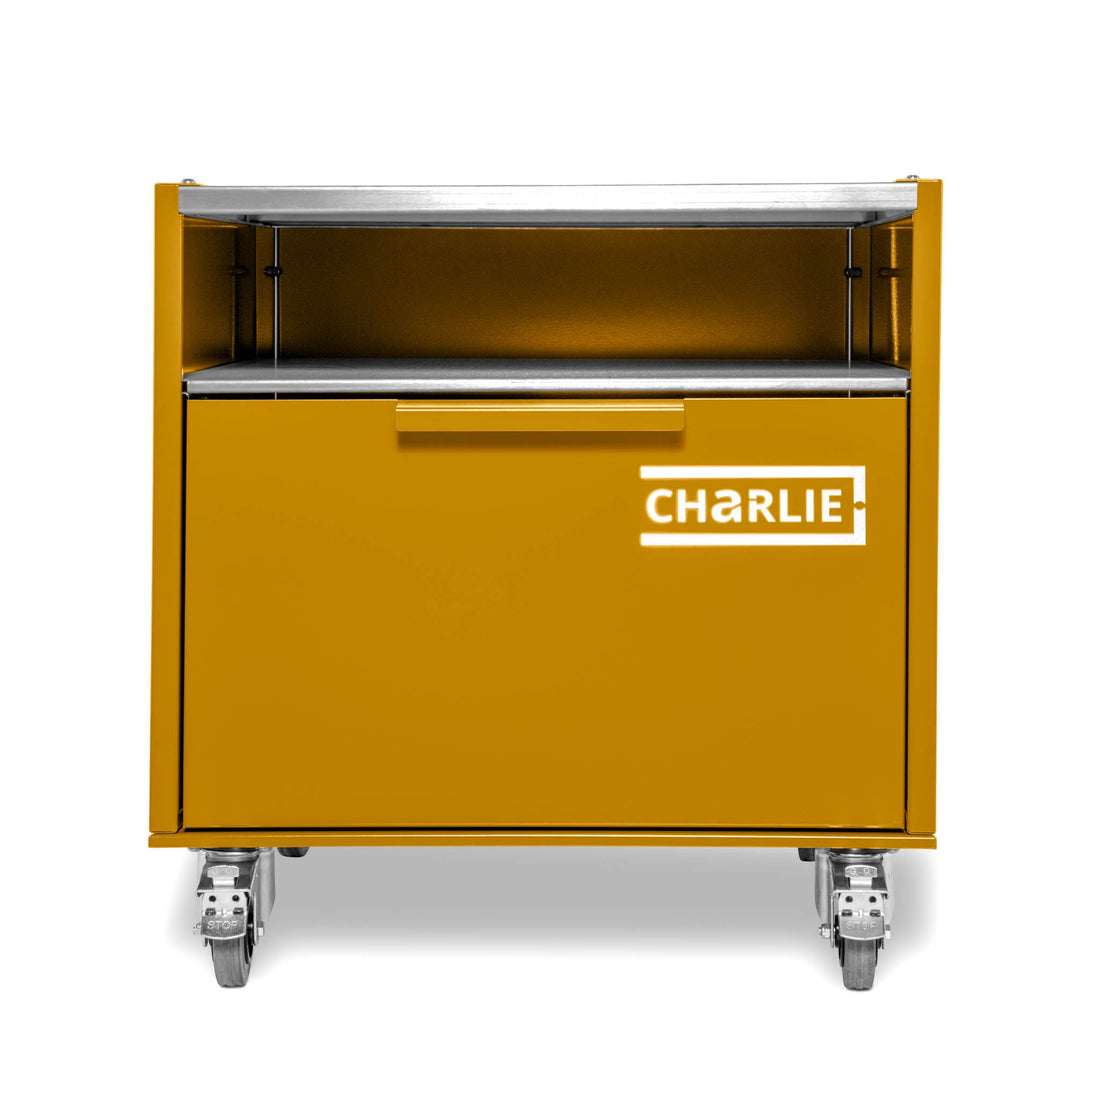 Charlie Base Cabinet - Honeycomb - Charlie Oven